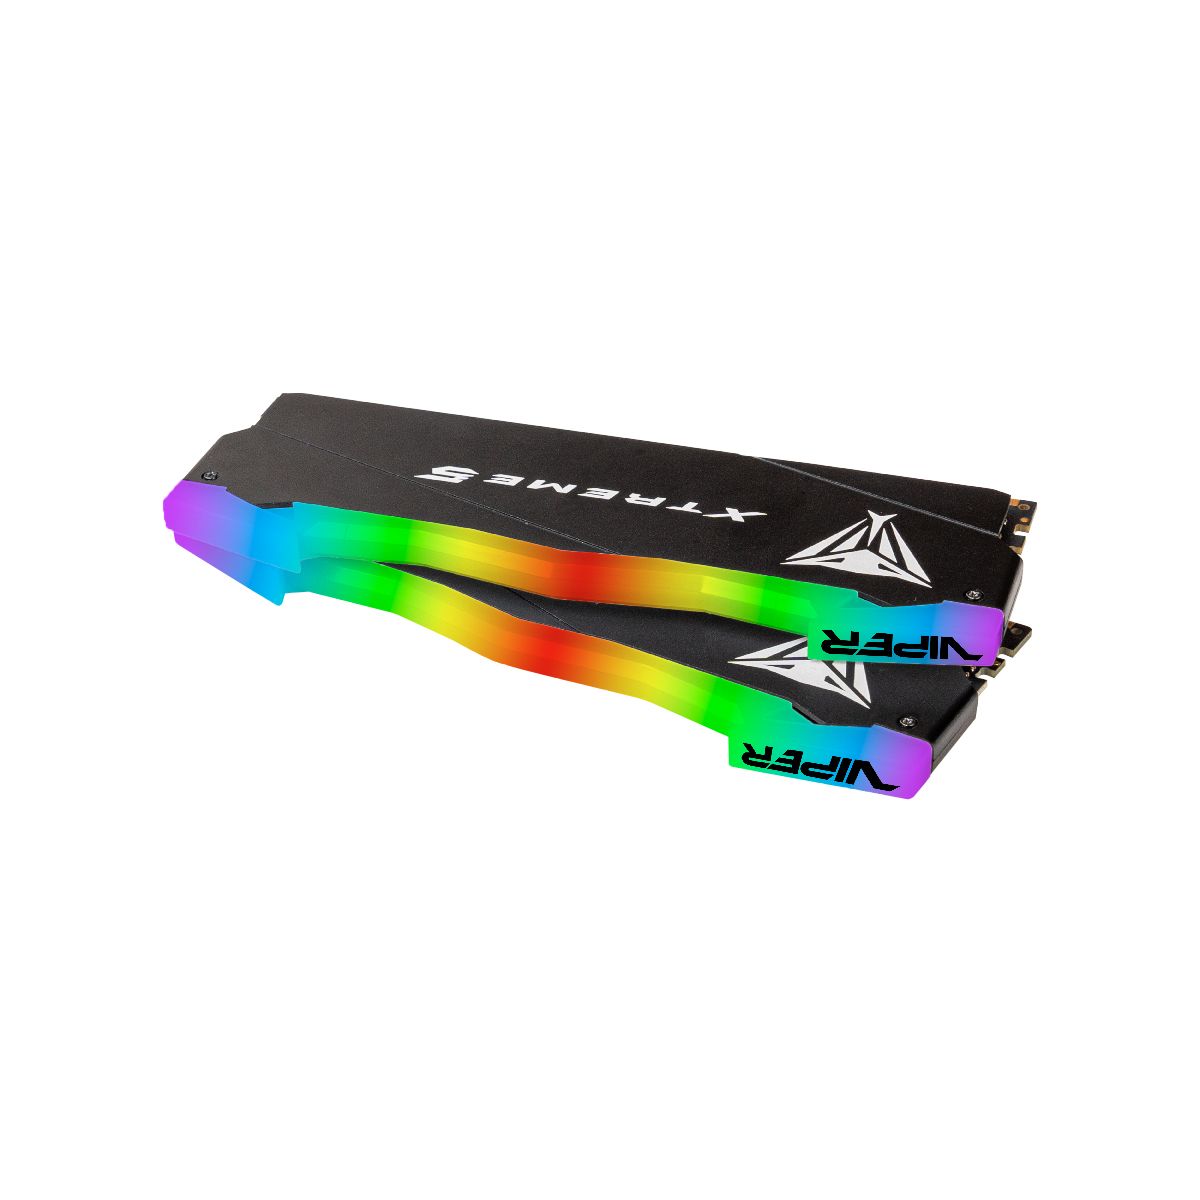 Patriot Viper Xtreme 5 RGB Series - DDR5 UDIMM PC5-64000 (8000MHz) CL38_Dual Kit